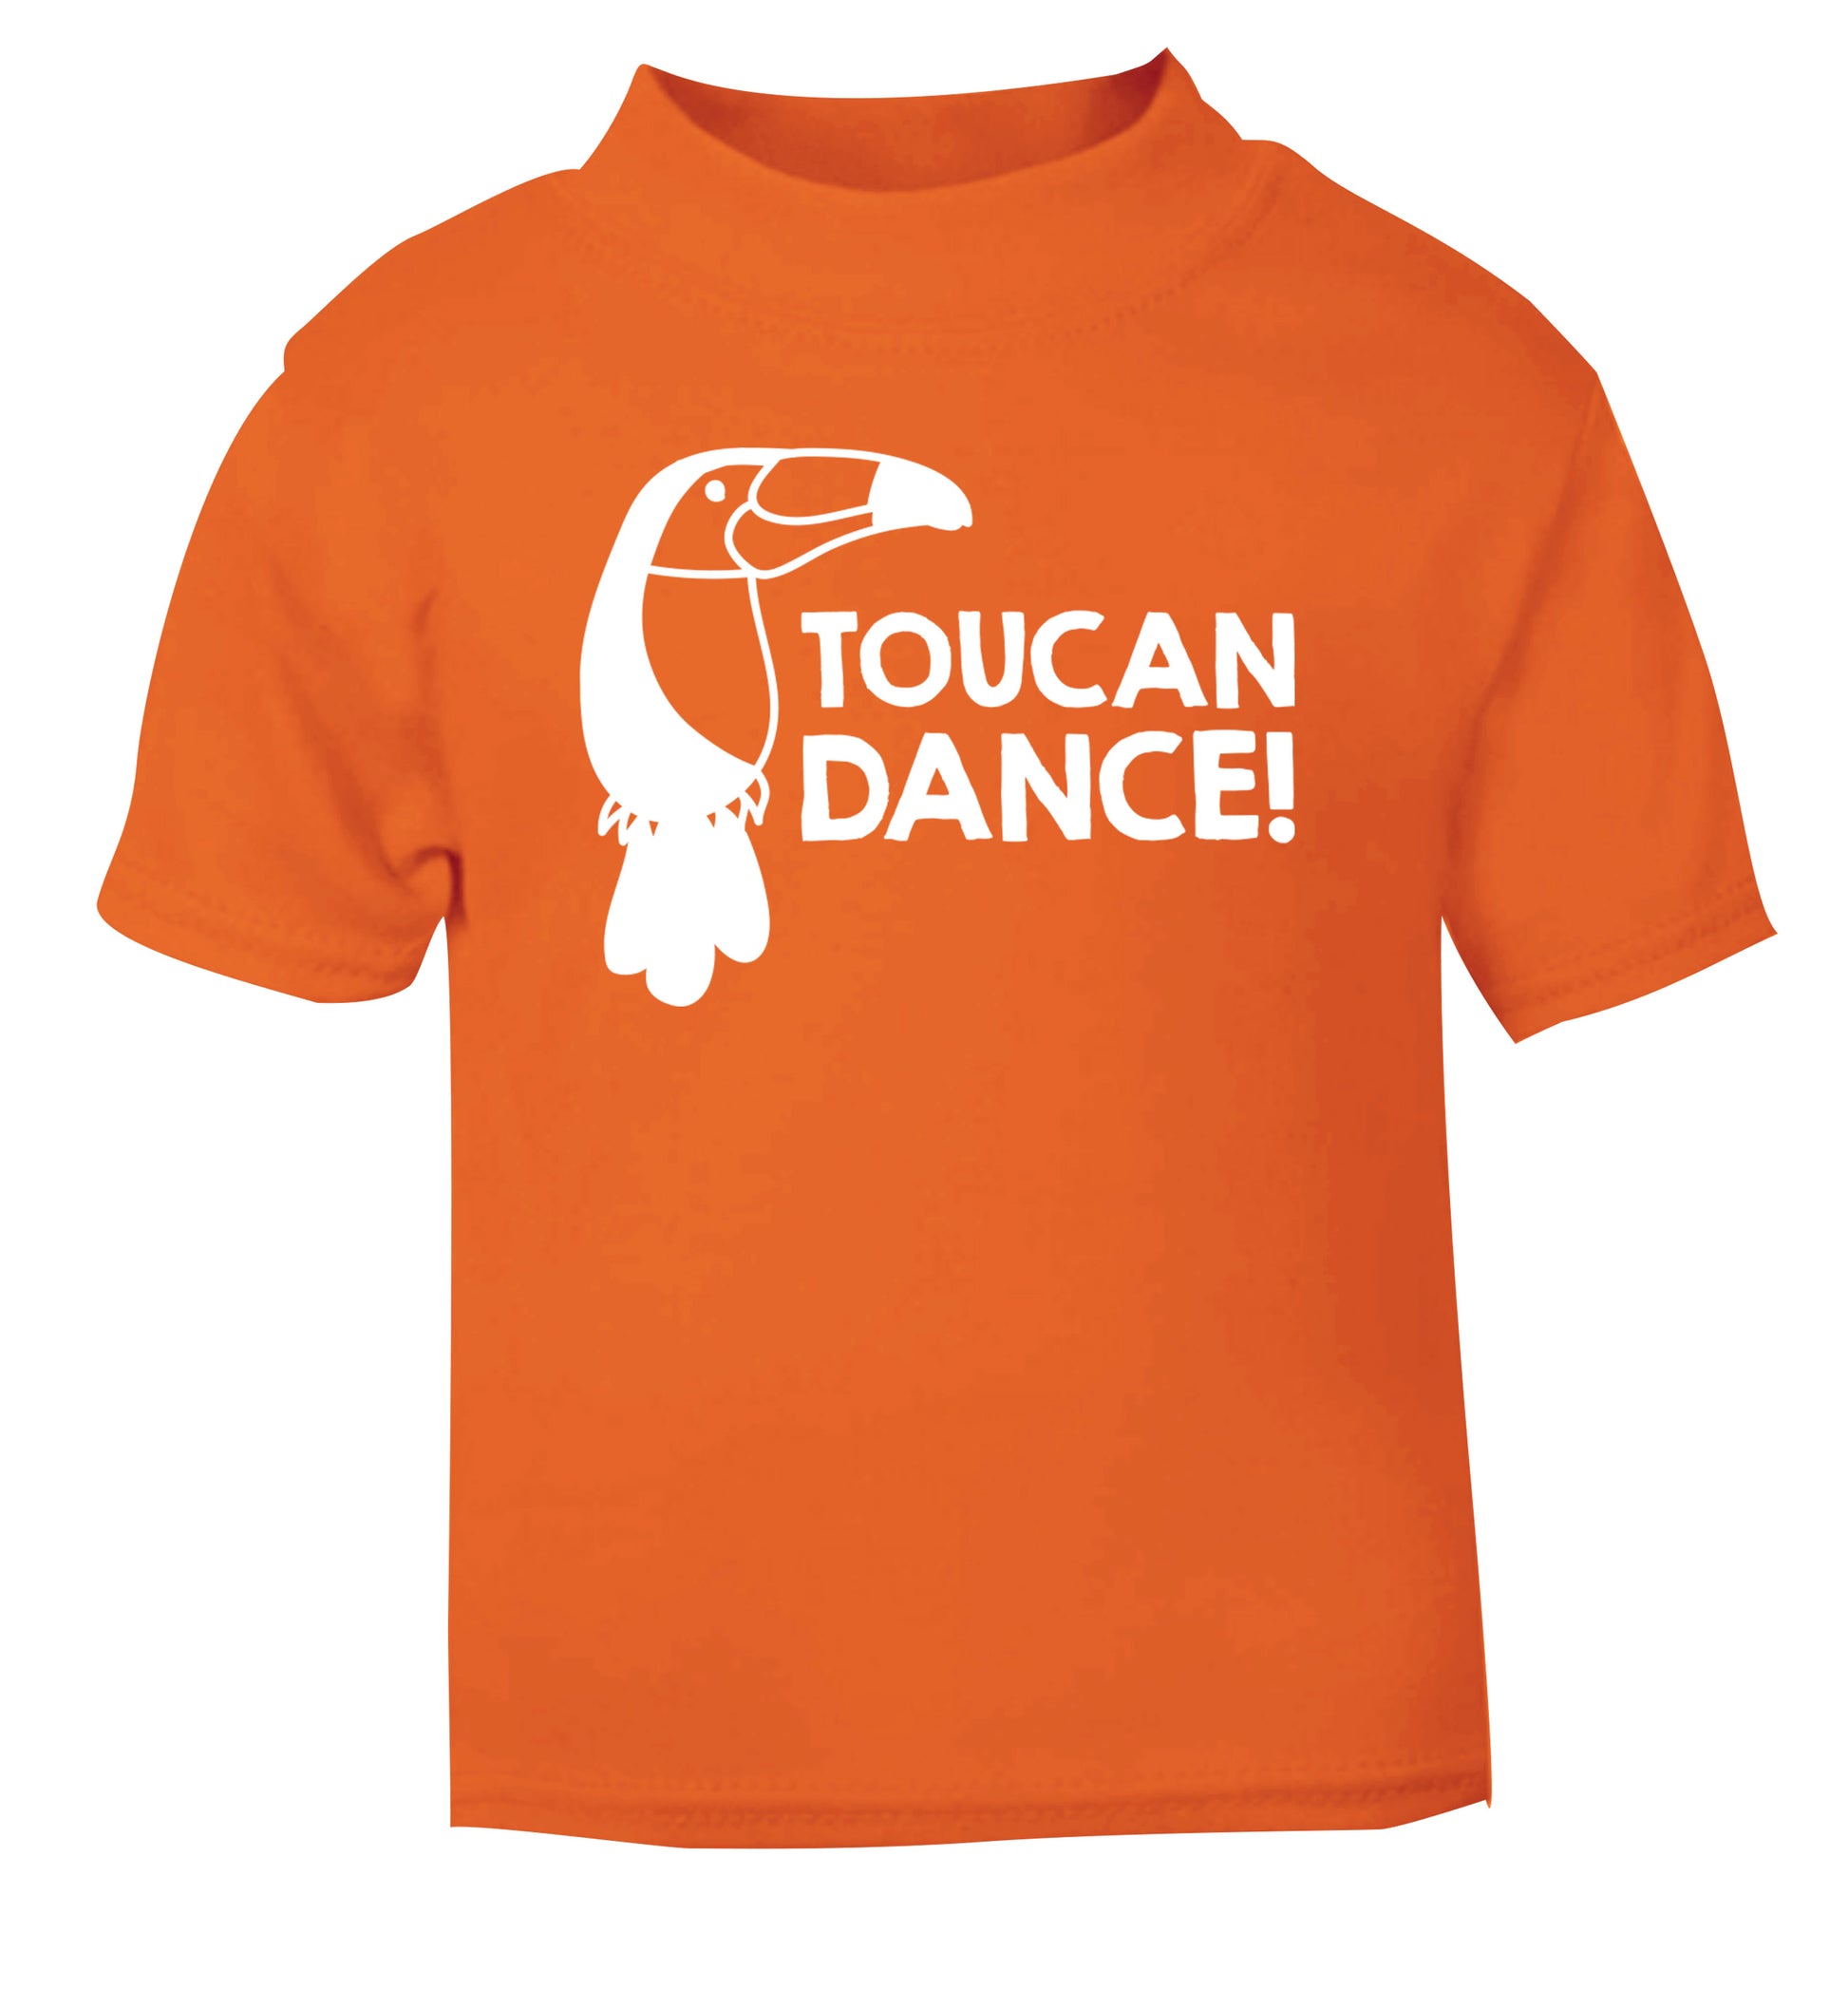 Toucan dance orange Baby Toddler Tshirt 2 Years